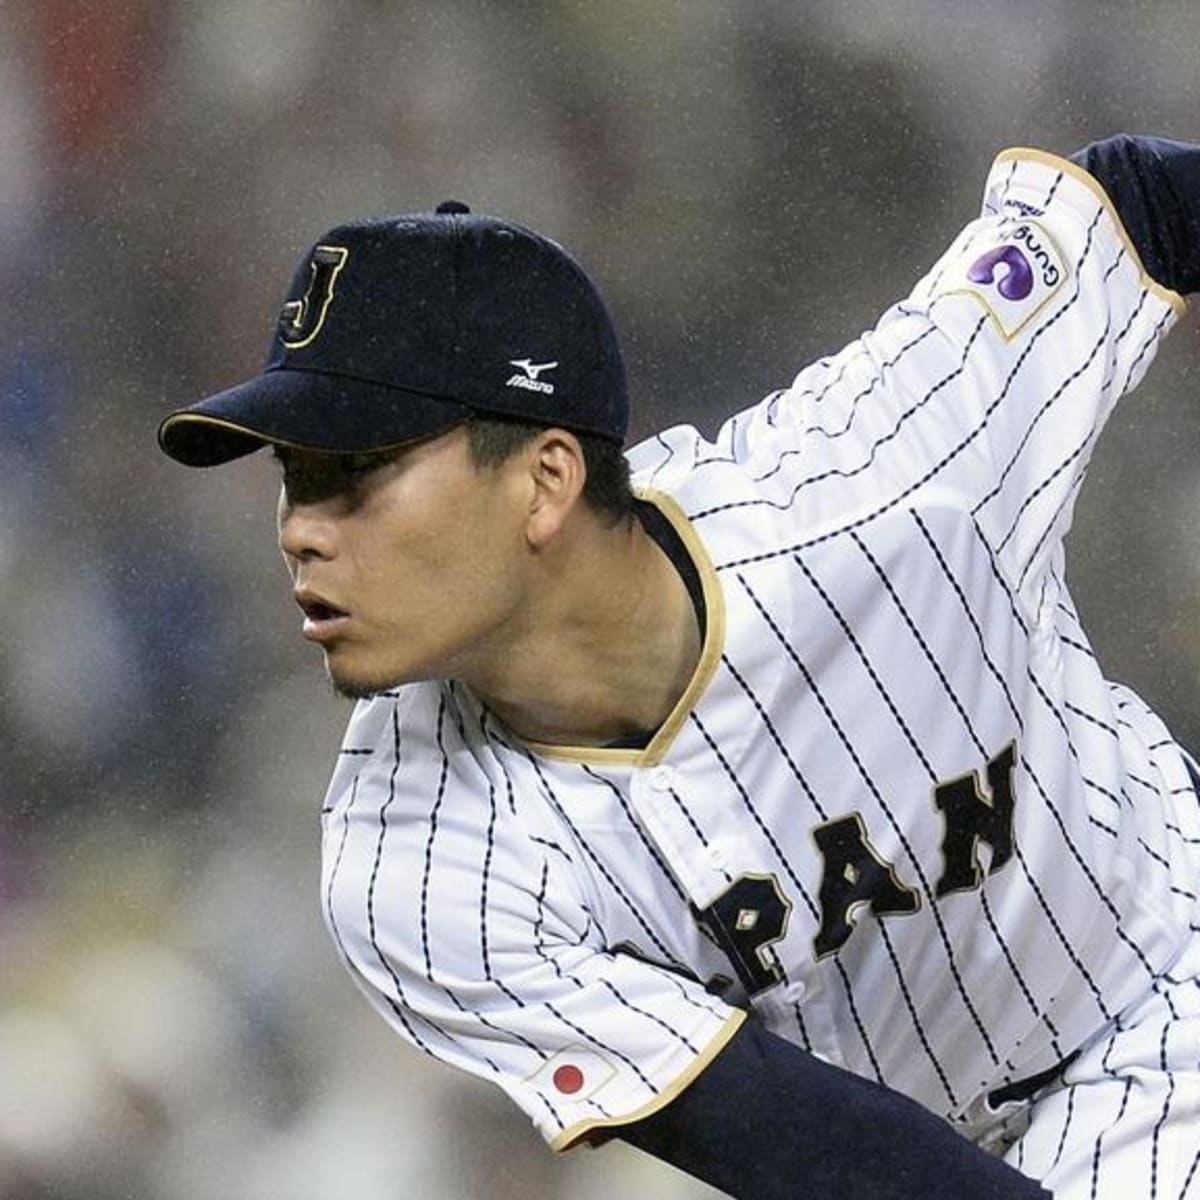 Mets' Kodai Senga well equipped to meet MLB challenge - The Japan Times